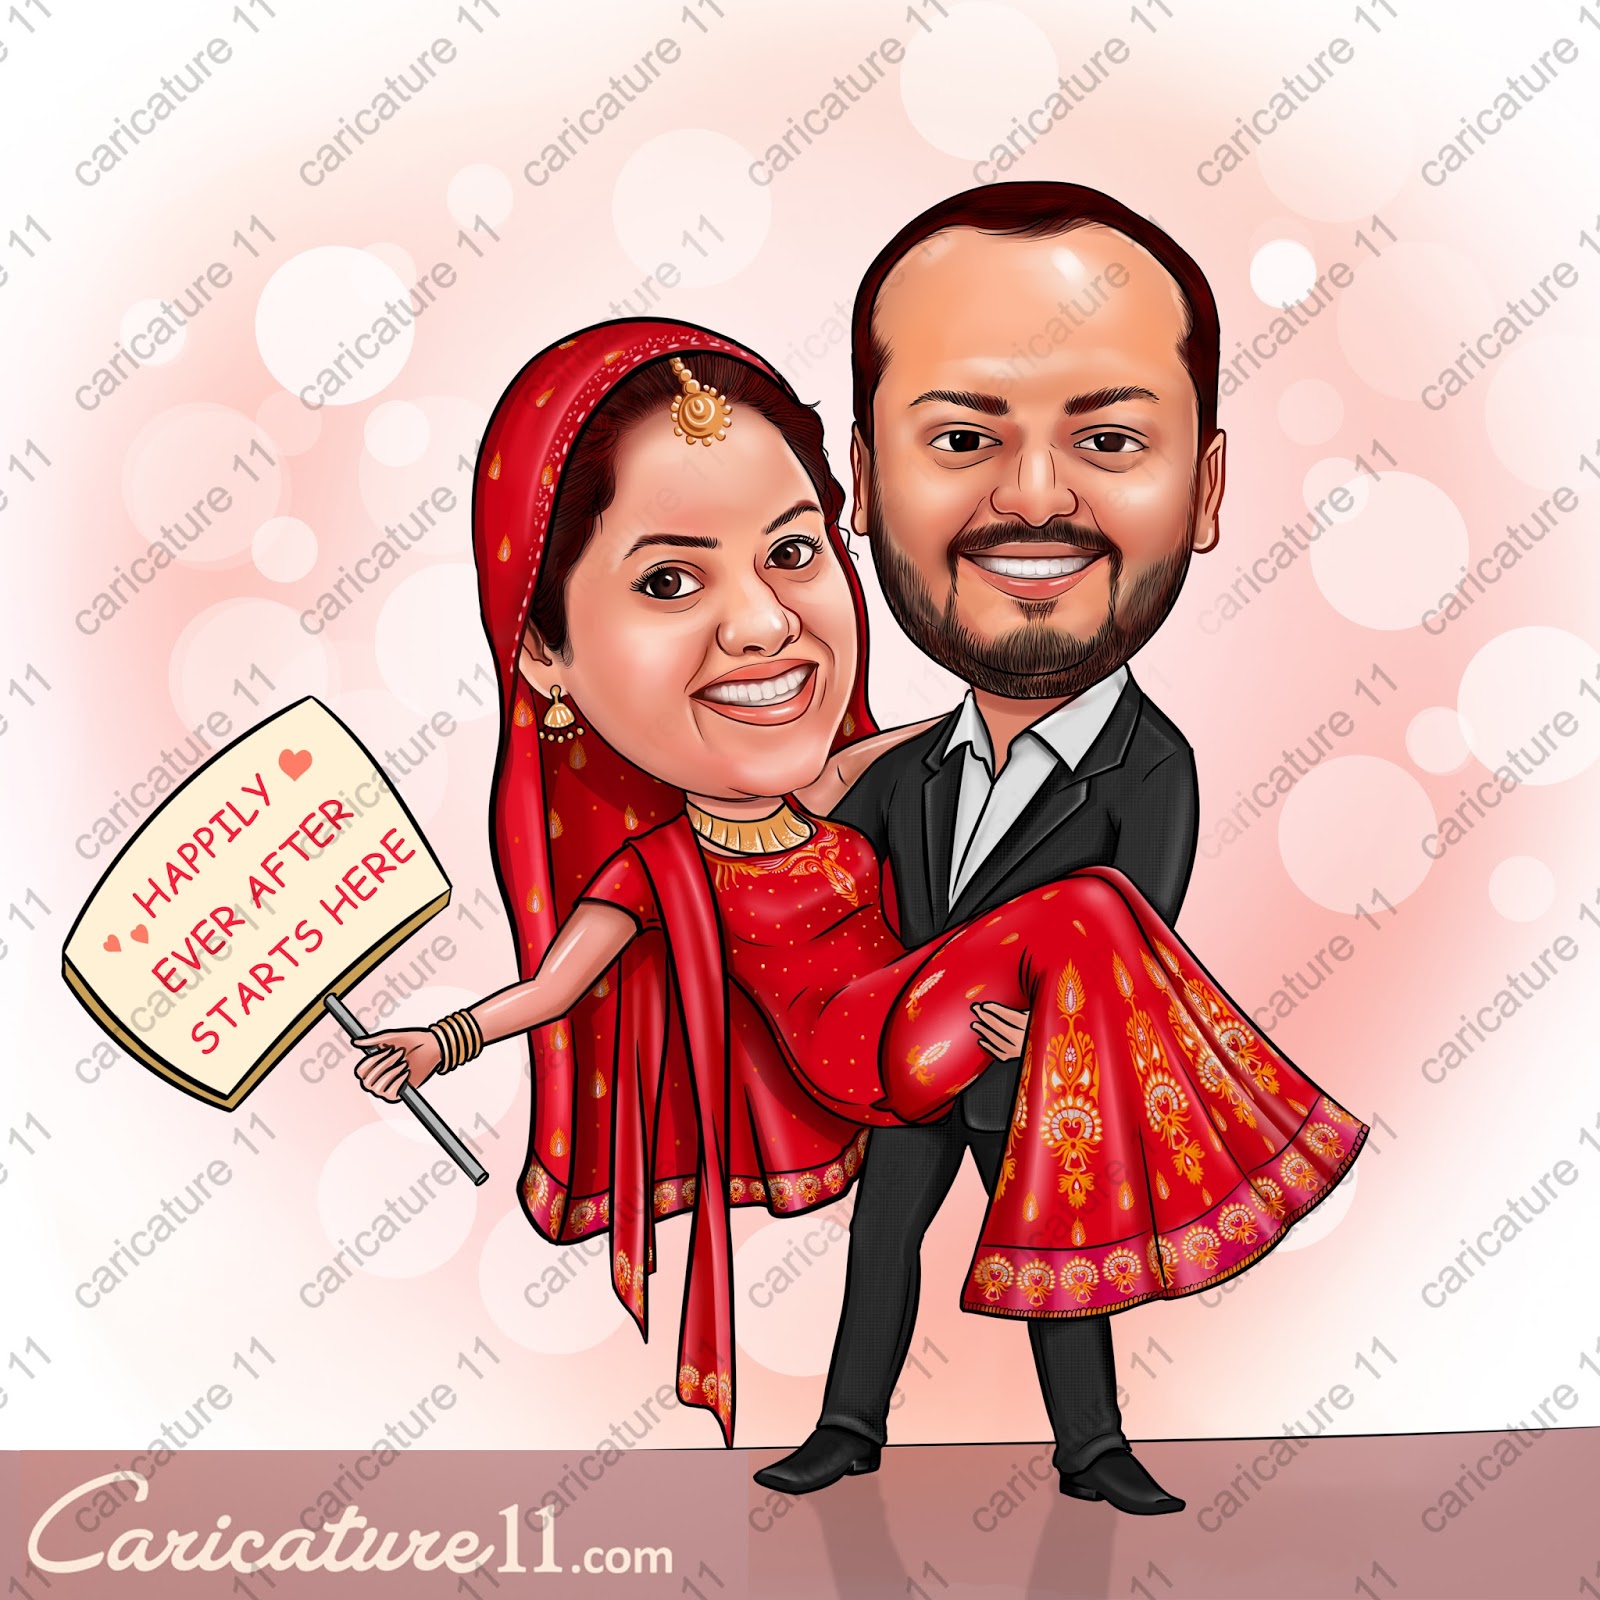 F wedding caricature Indian couple | Caricature11